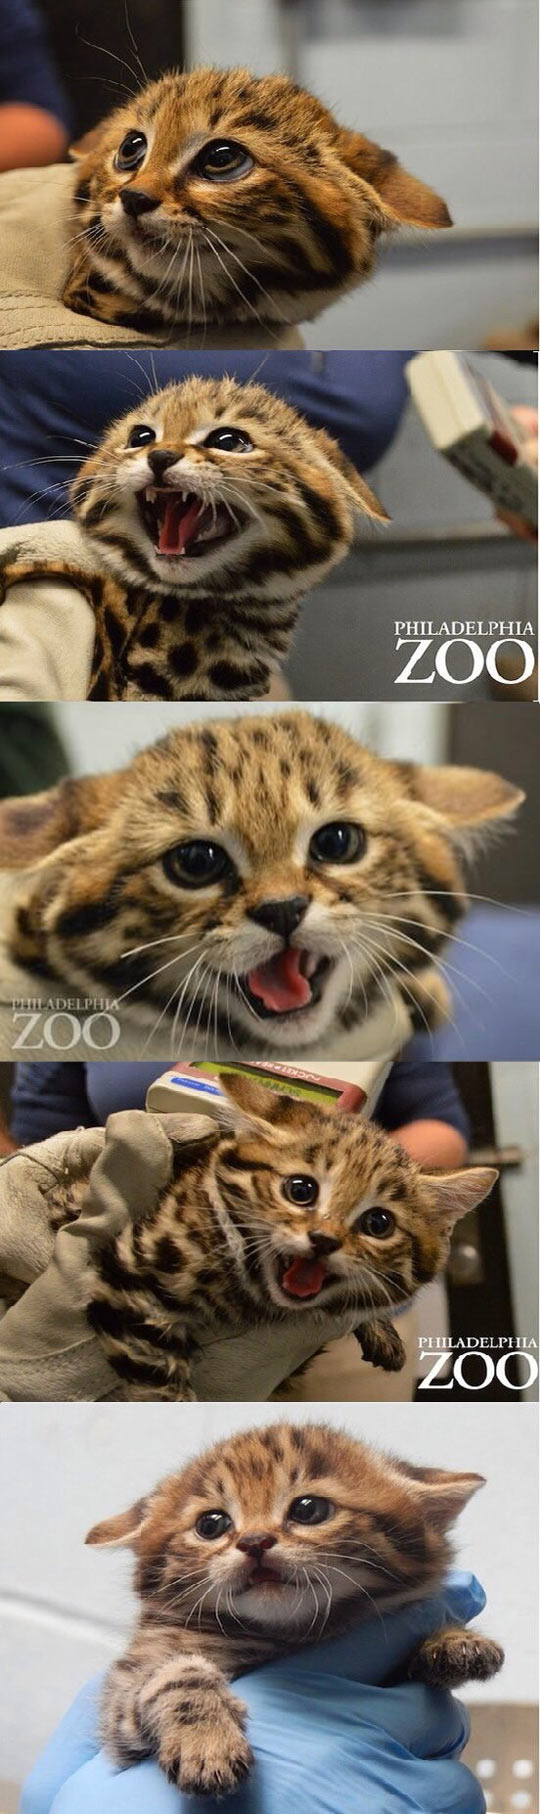 The Philadelphia Zoo has the cutest kitties.